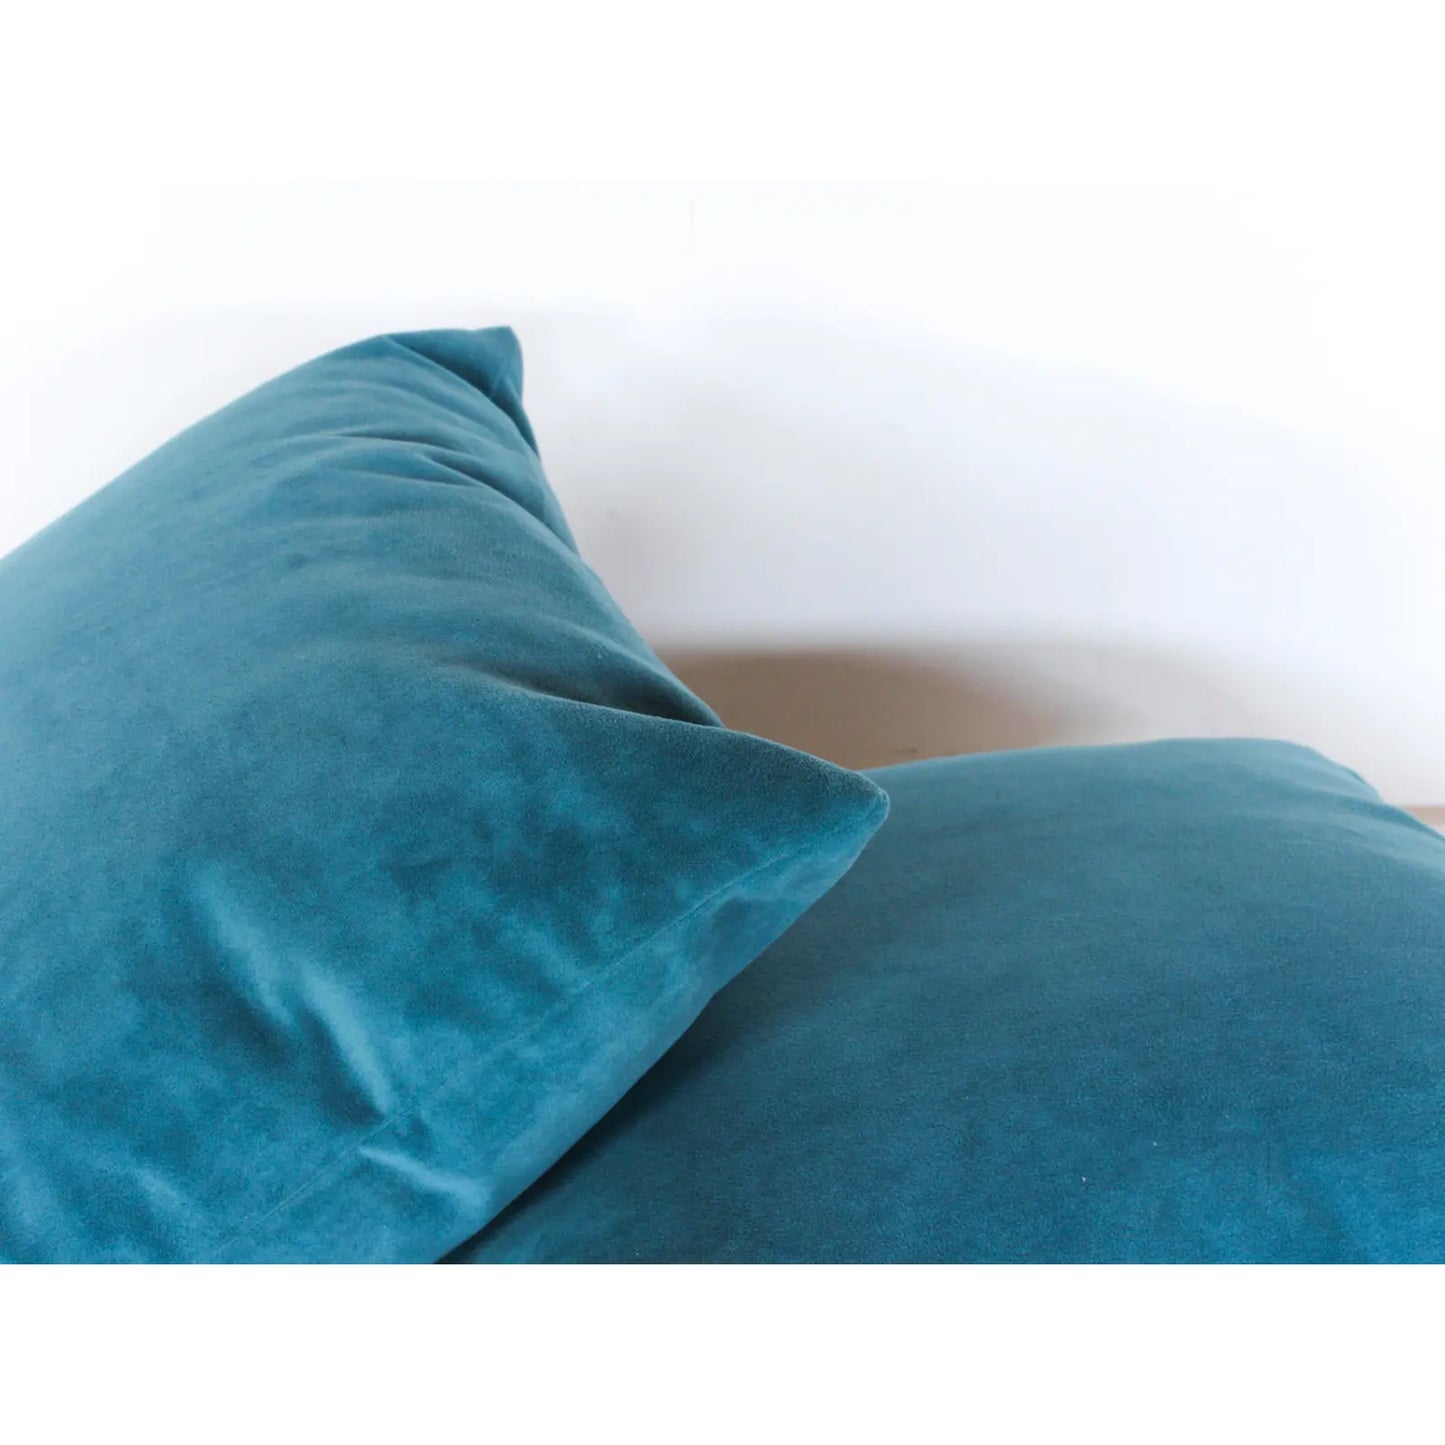 Pair of Turquoise Velvet Accent Pillows